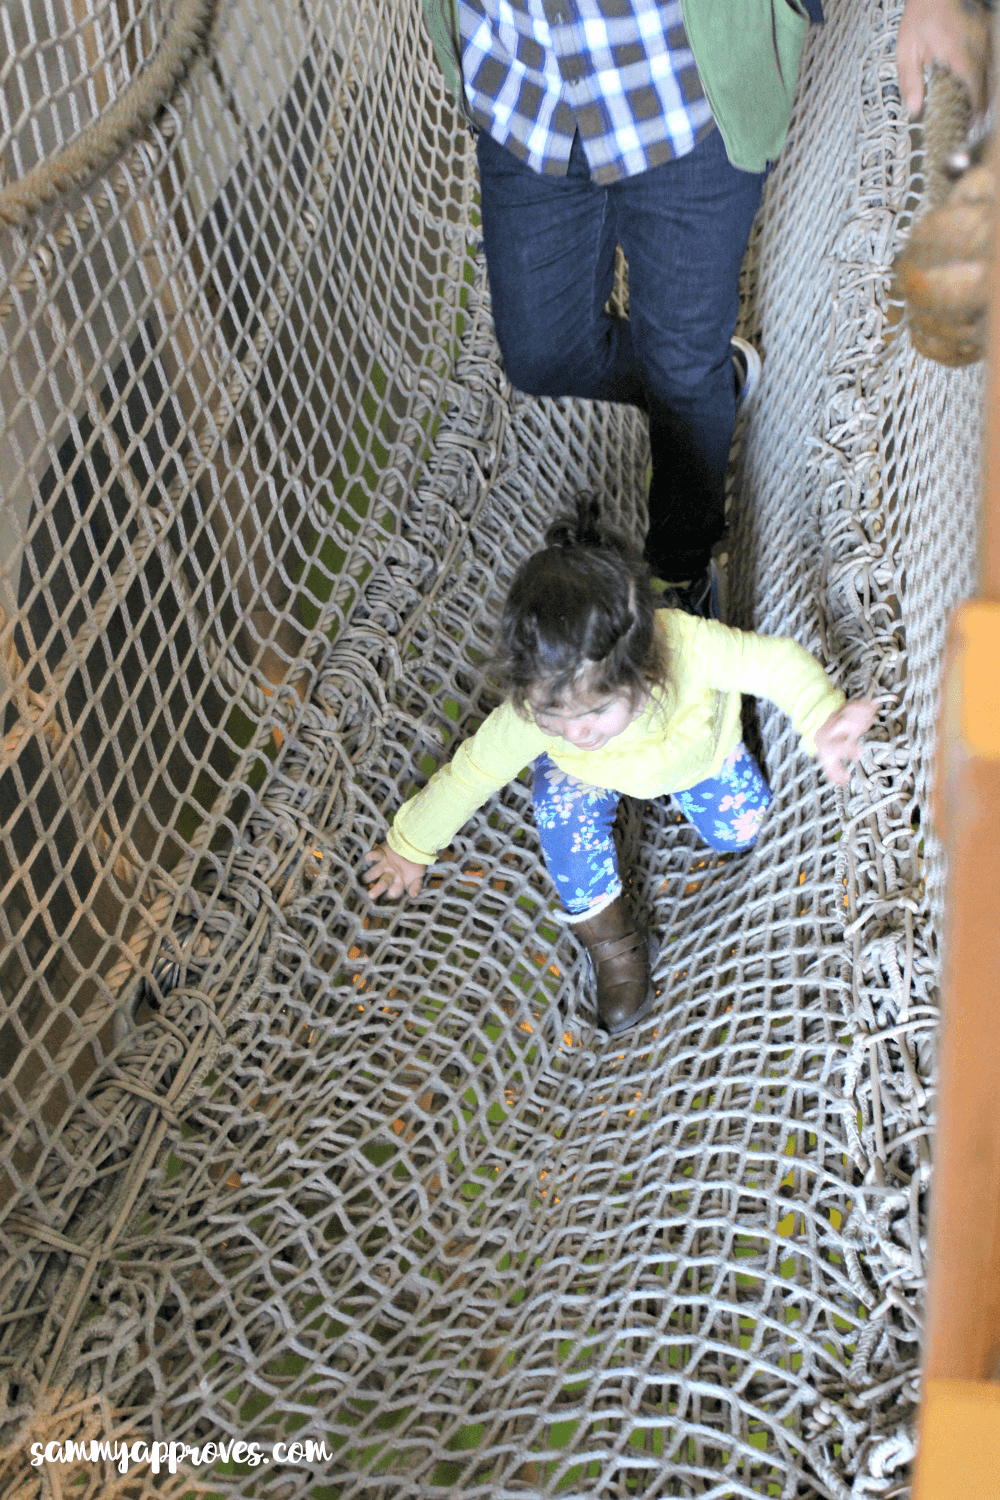 5 Reasons Why Lehi Utah's Museum of Natural Curiosities is Perfect for Toddlers